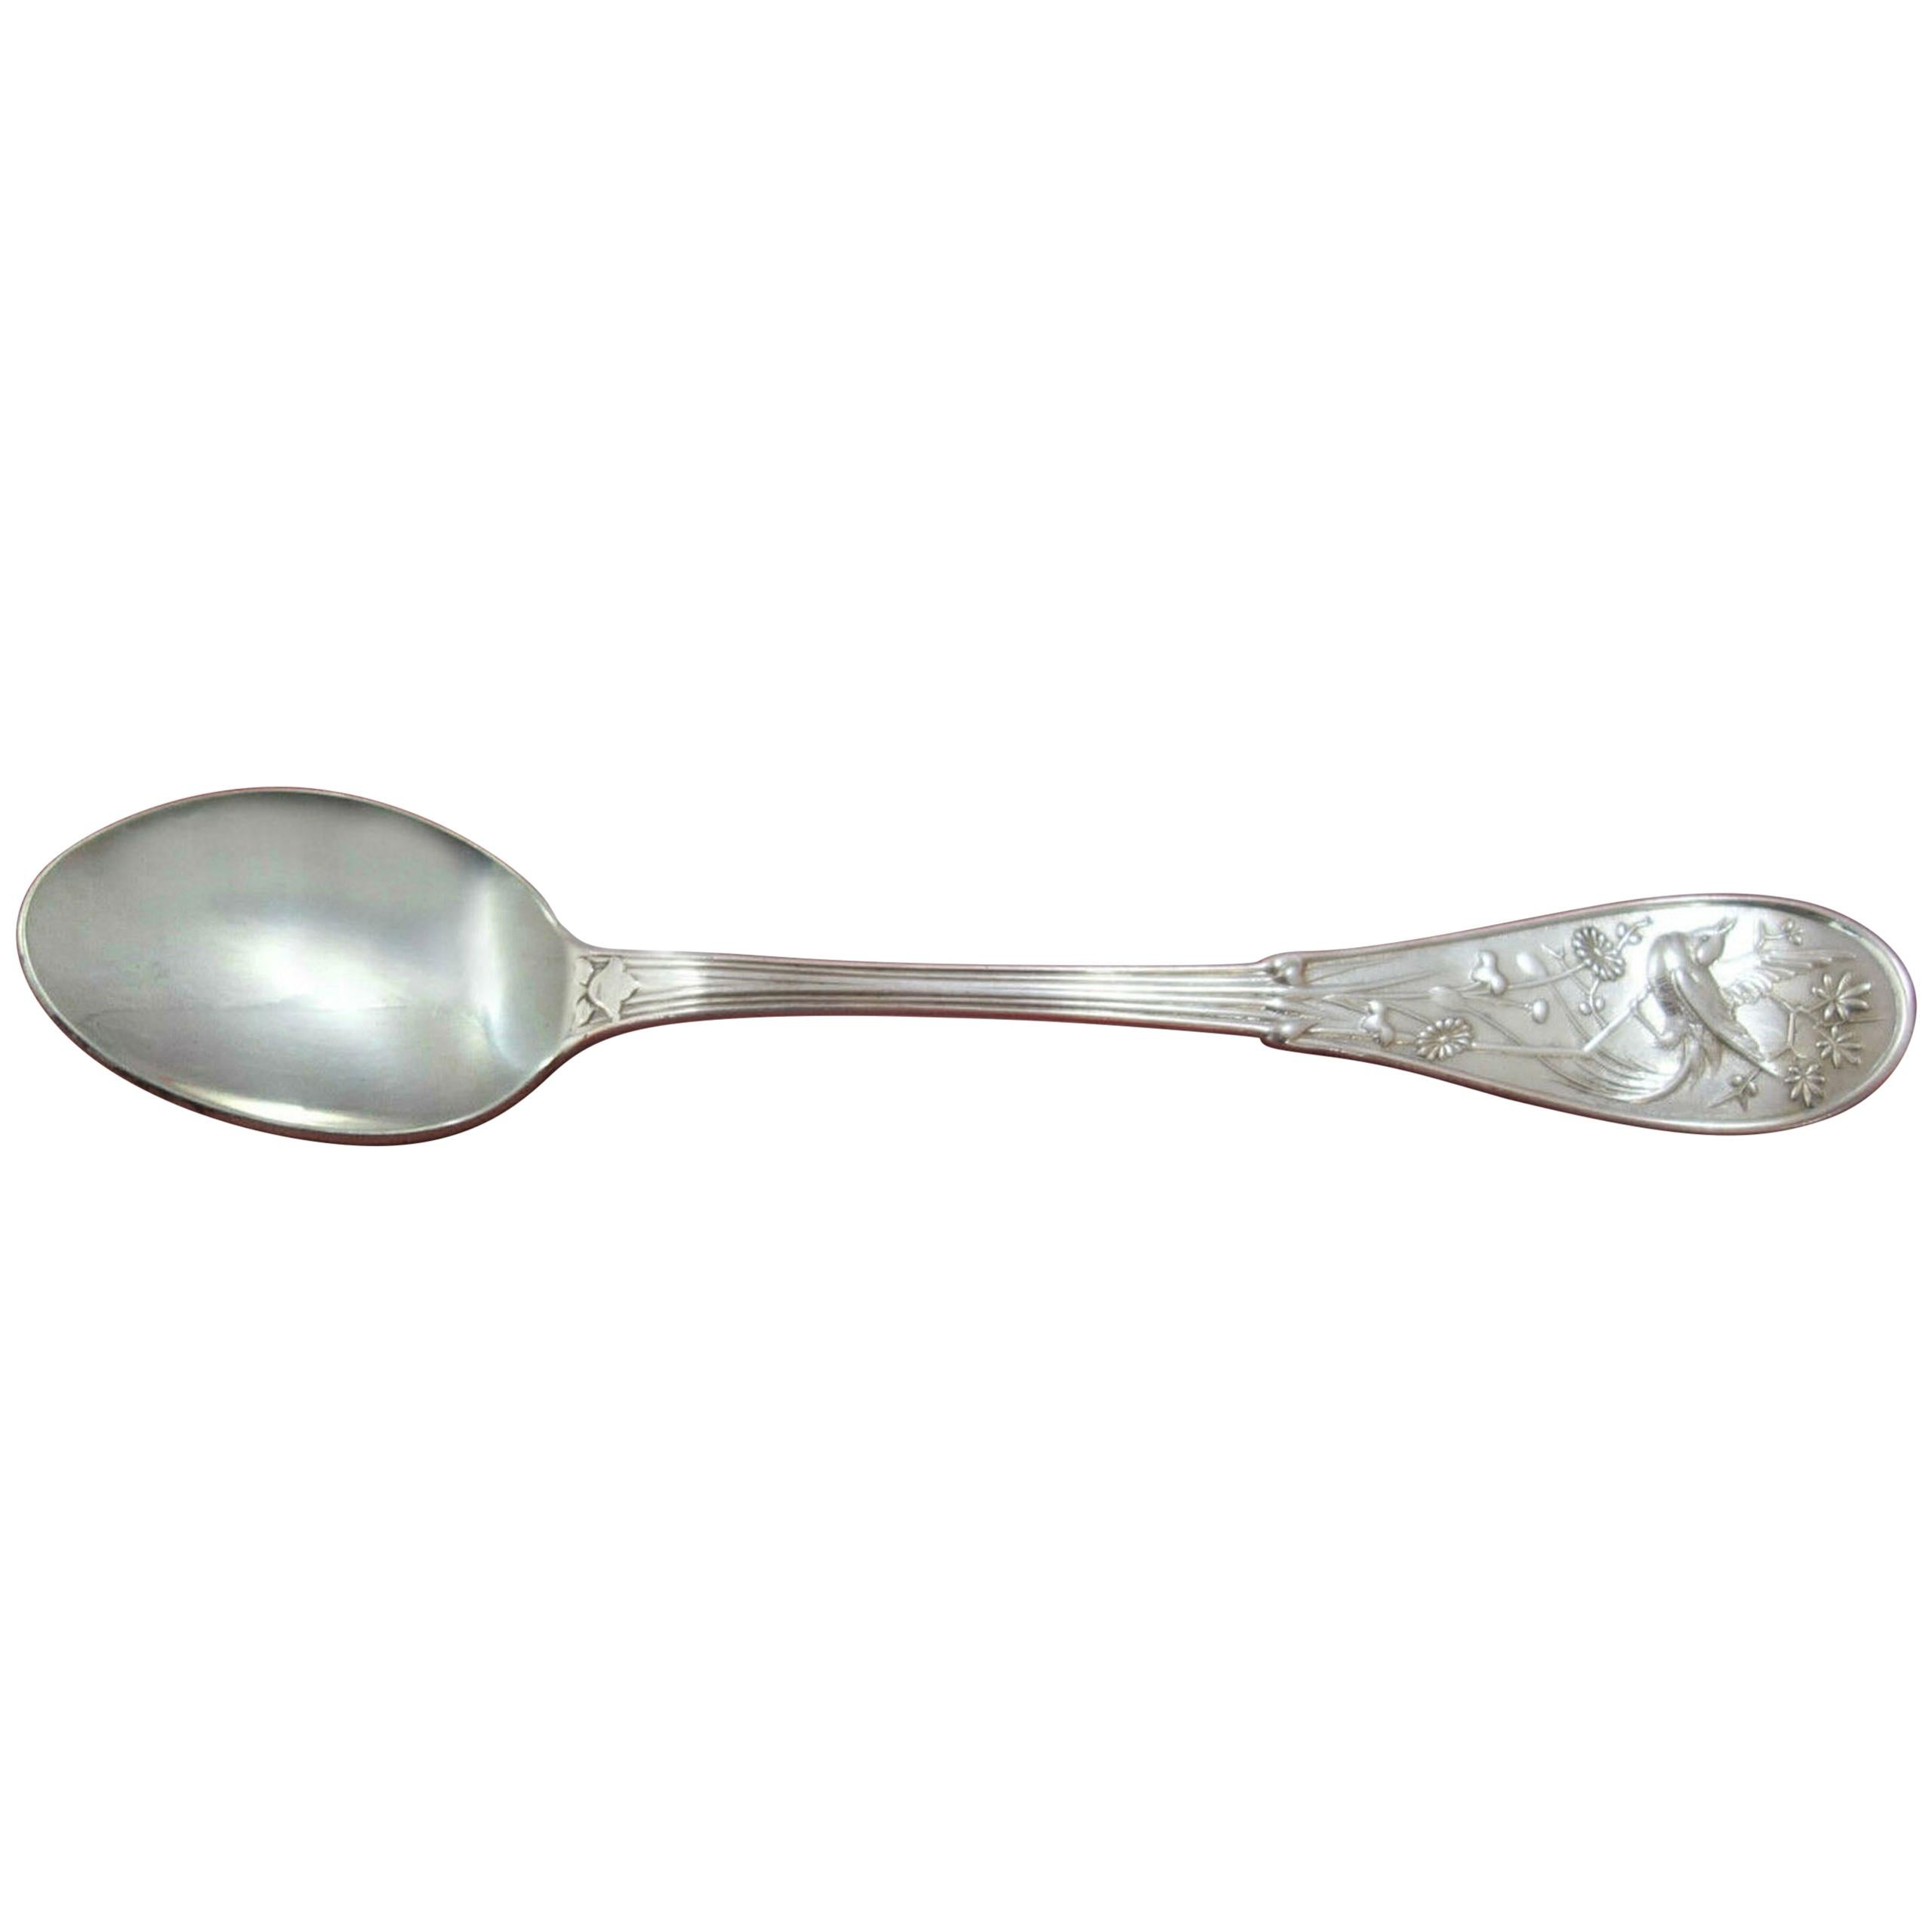 Japanese by Tiffany & Co. Sterling Silver Infant Feeding Spoon Custom